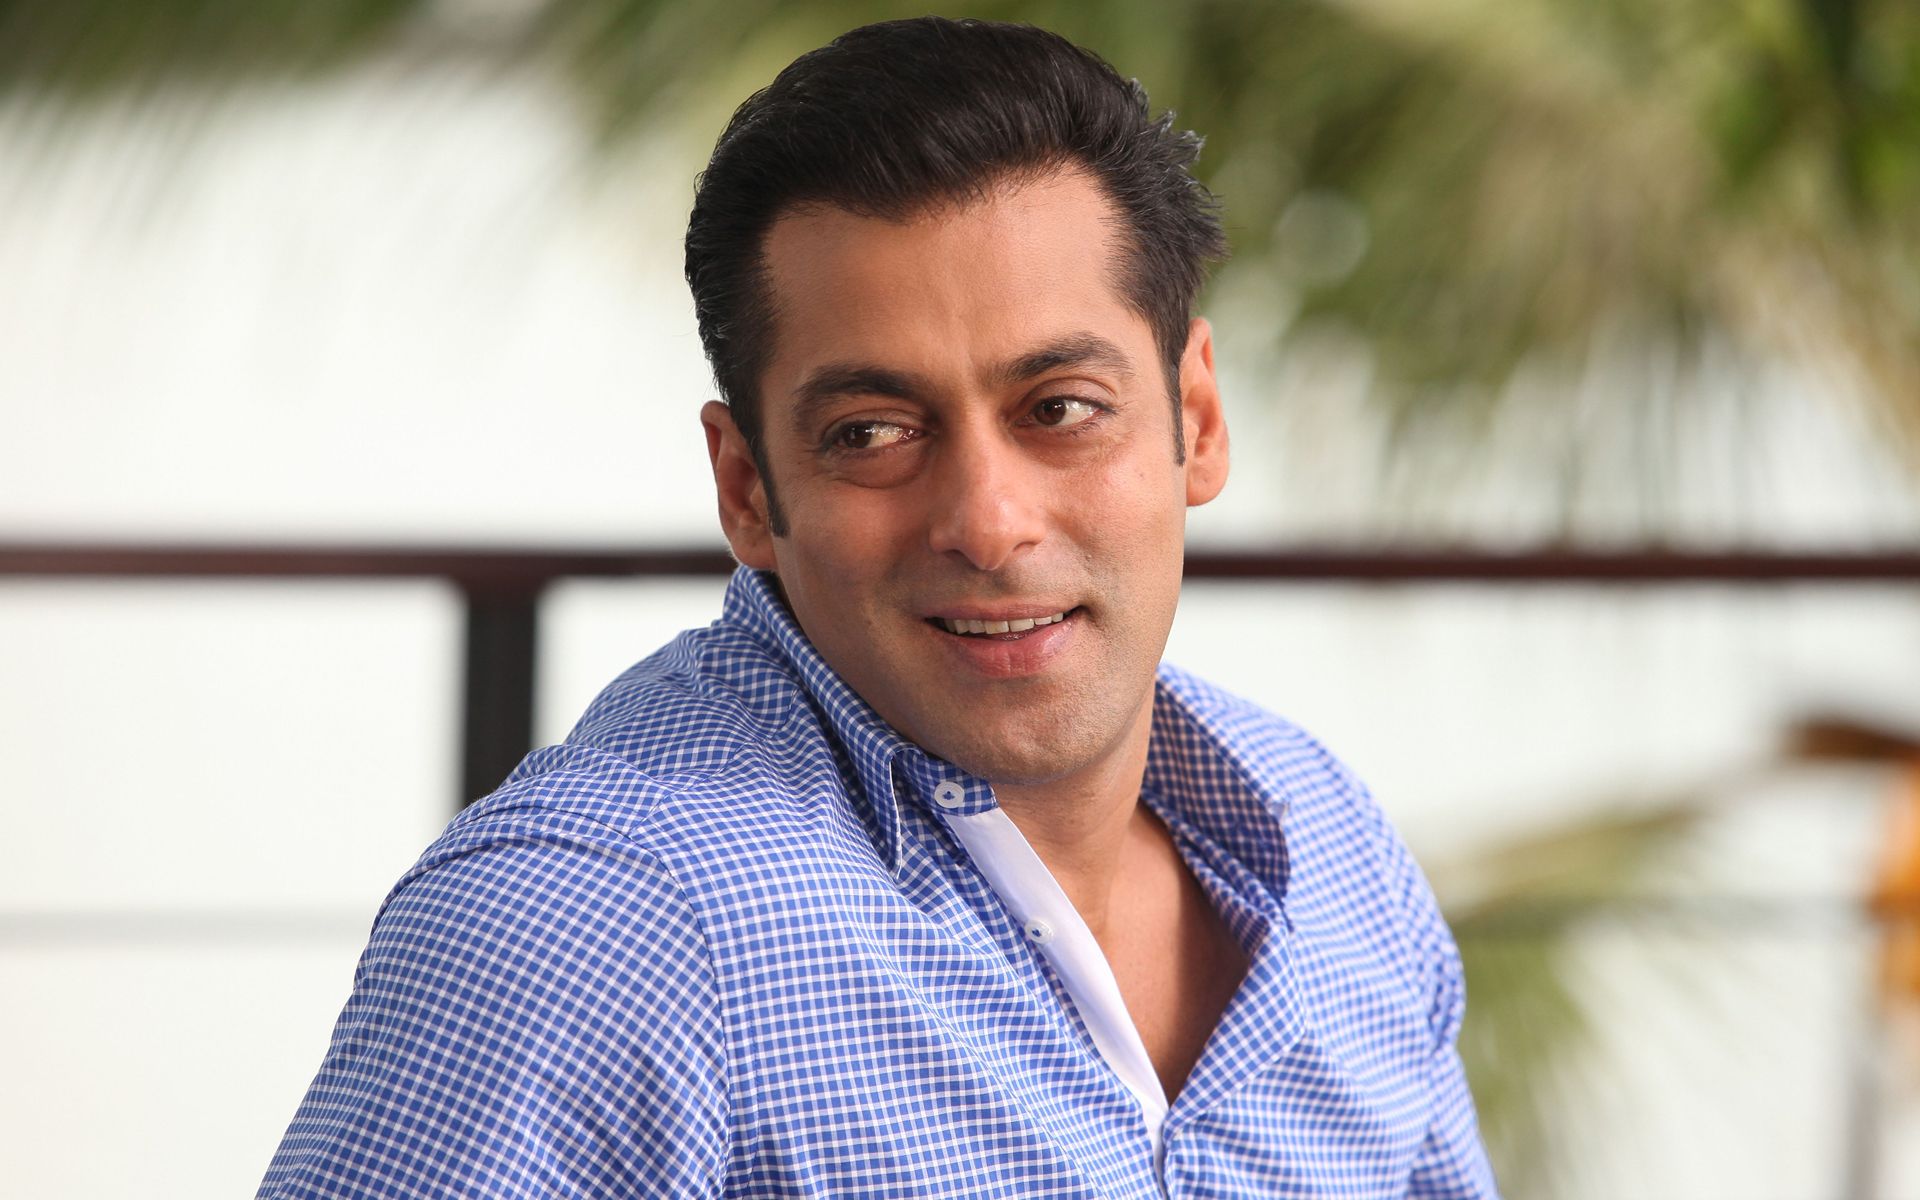 Salman Khan HD Wallpapers 2015 - etc FN